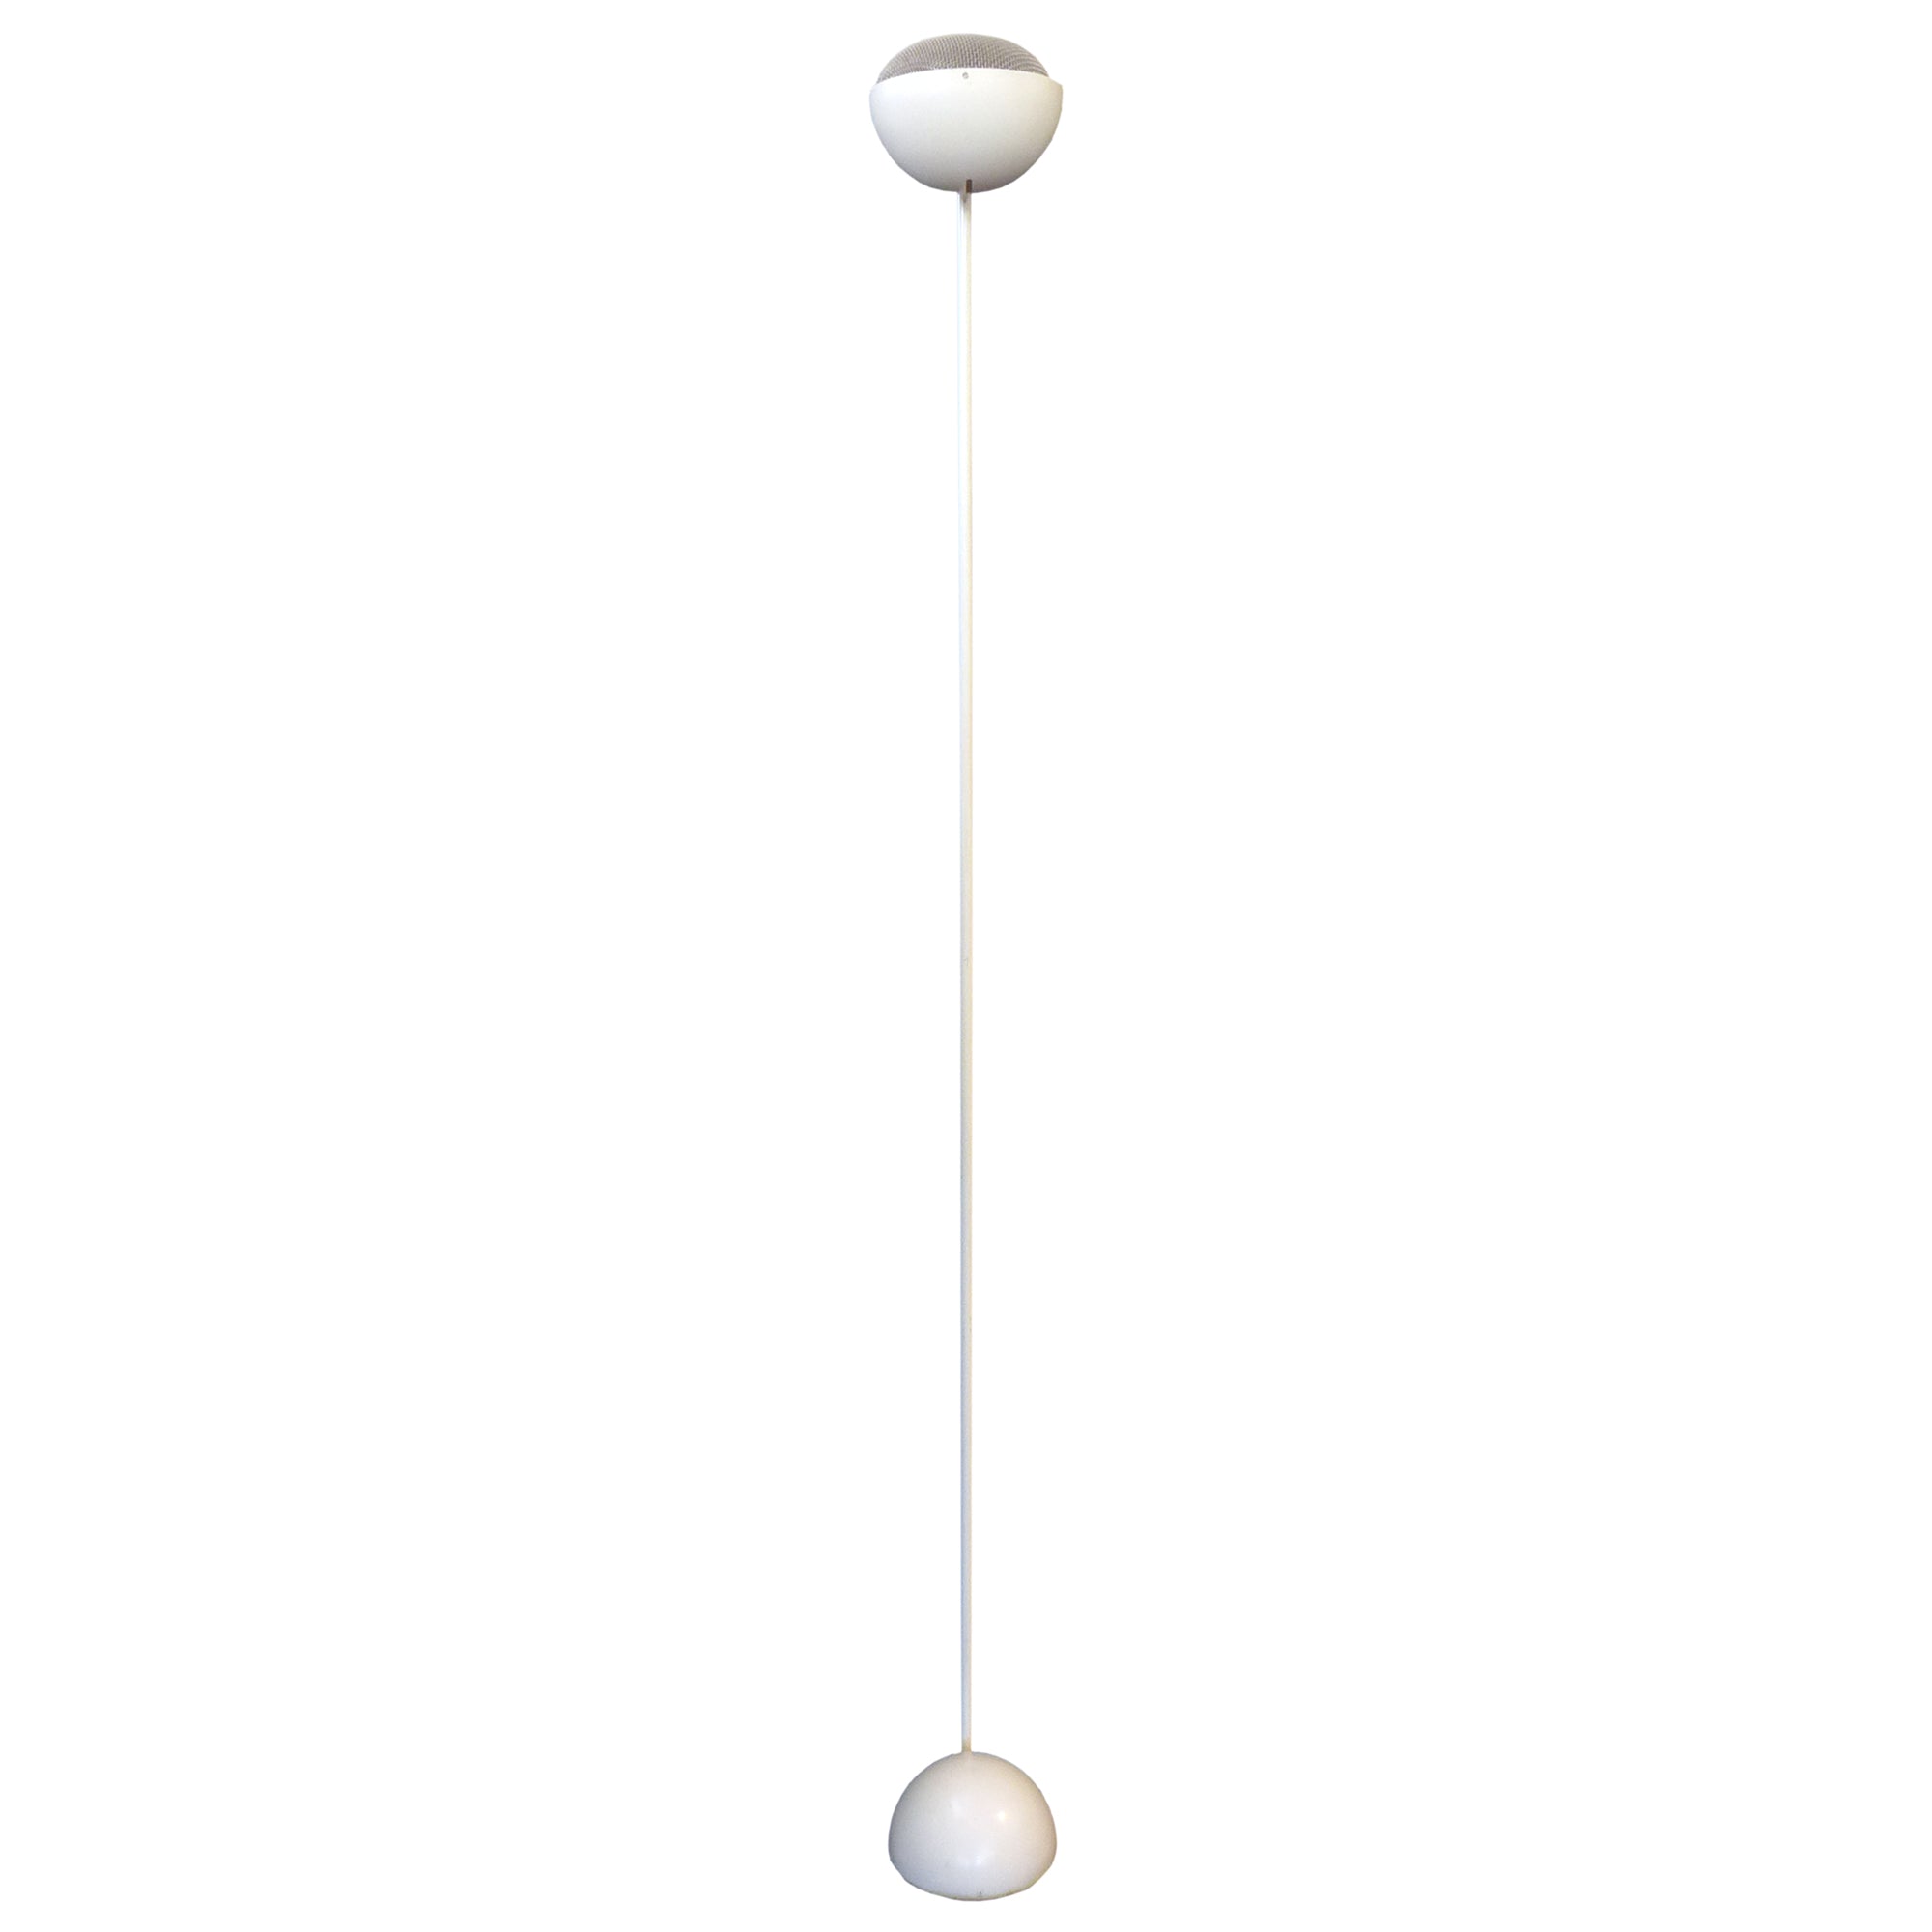 Italian Tall Modernist Floor Lamp